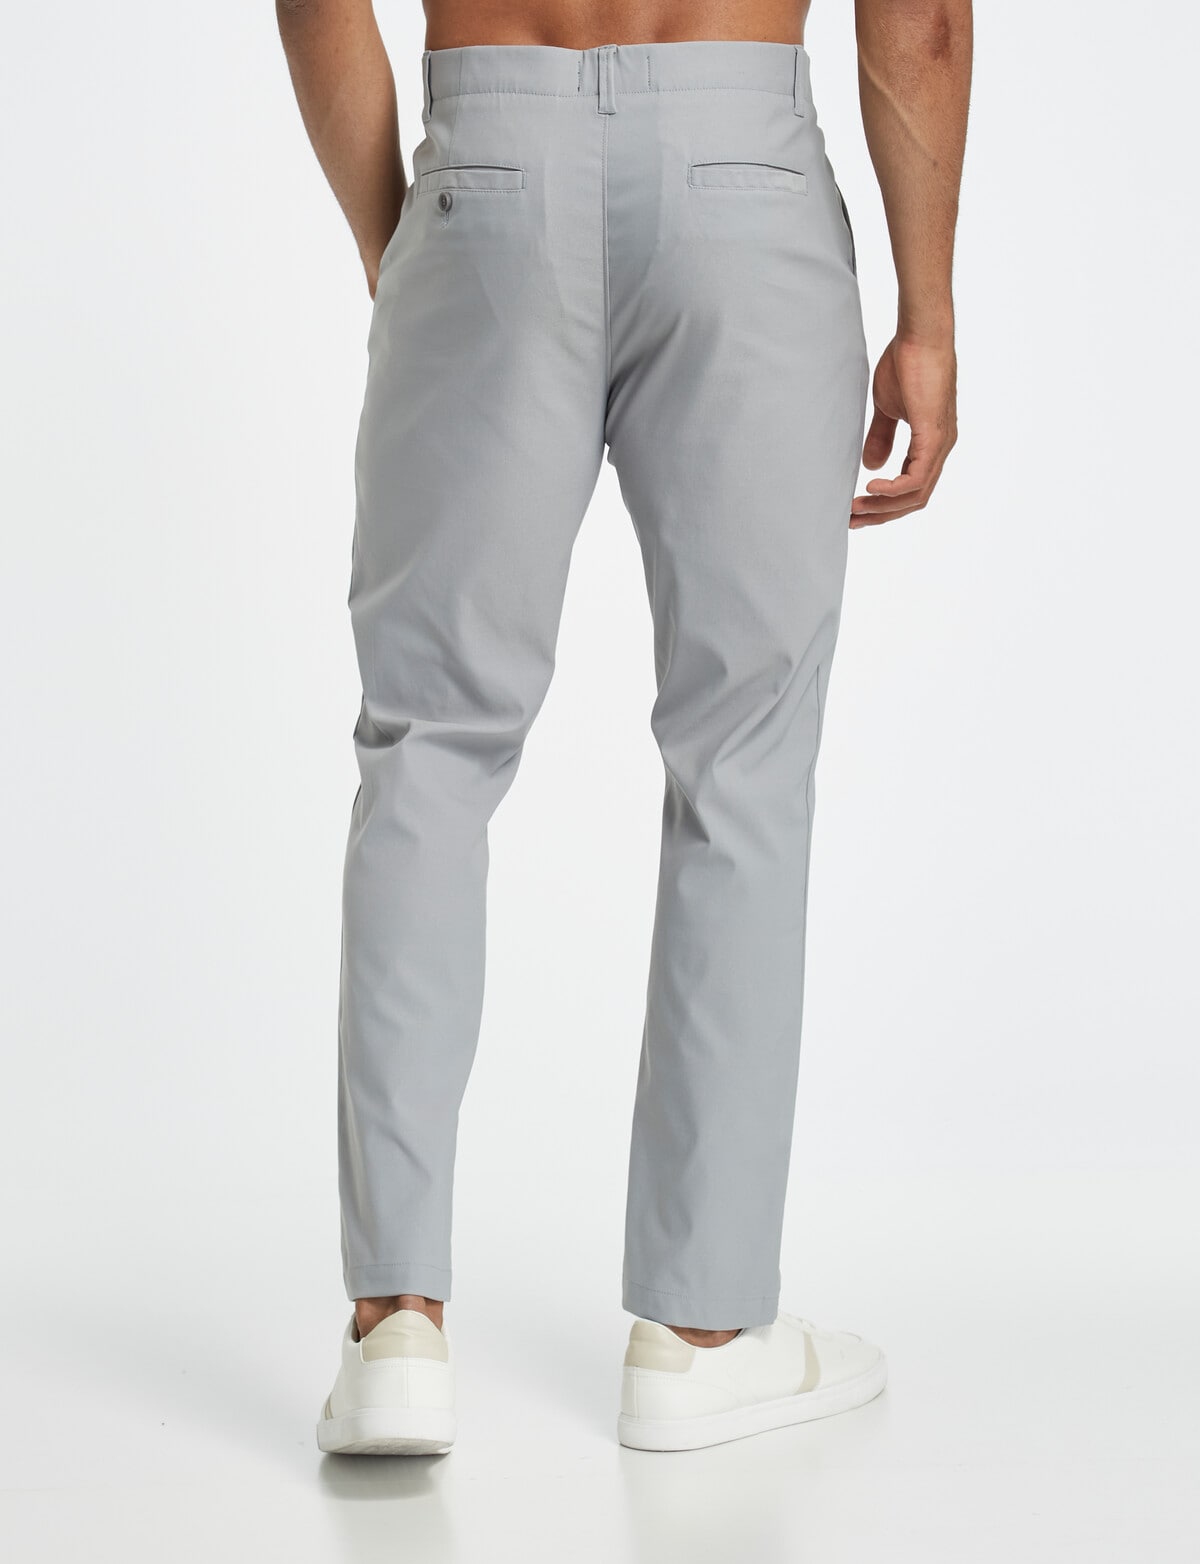 Lululemon Grey Lined (Regular) 31.5 Dance Studio Pants size 2